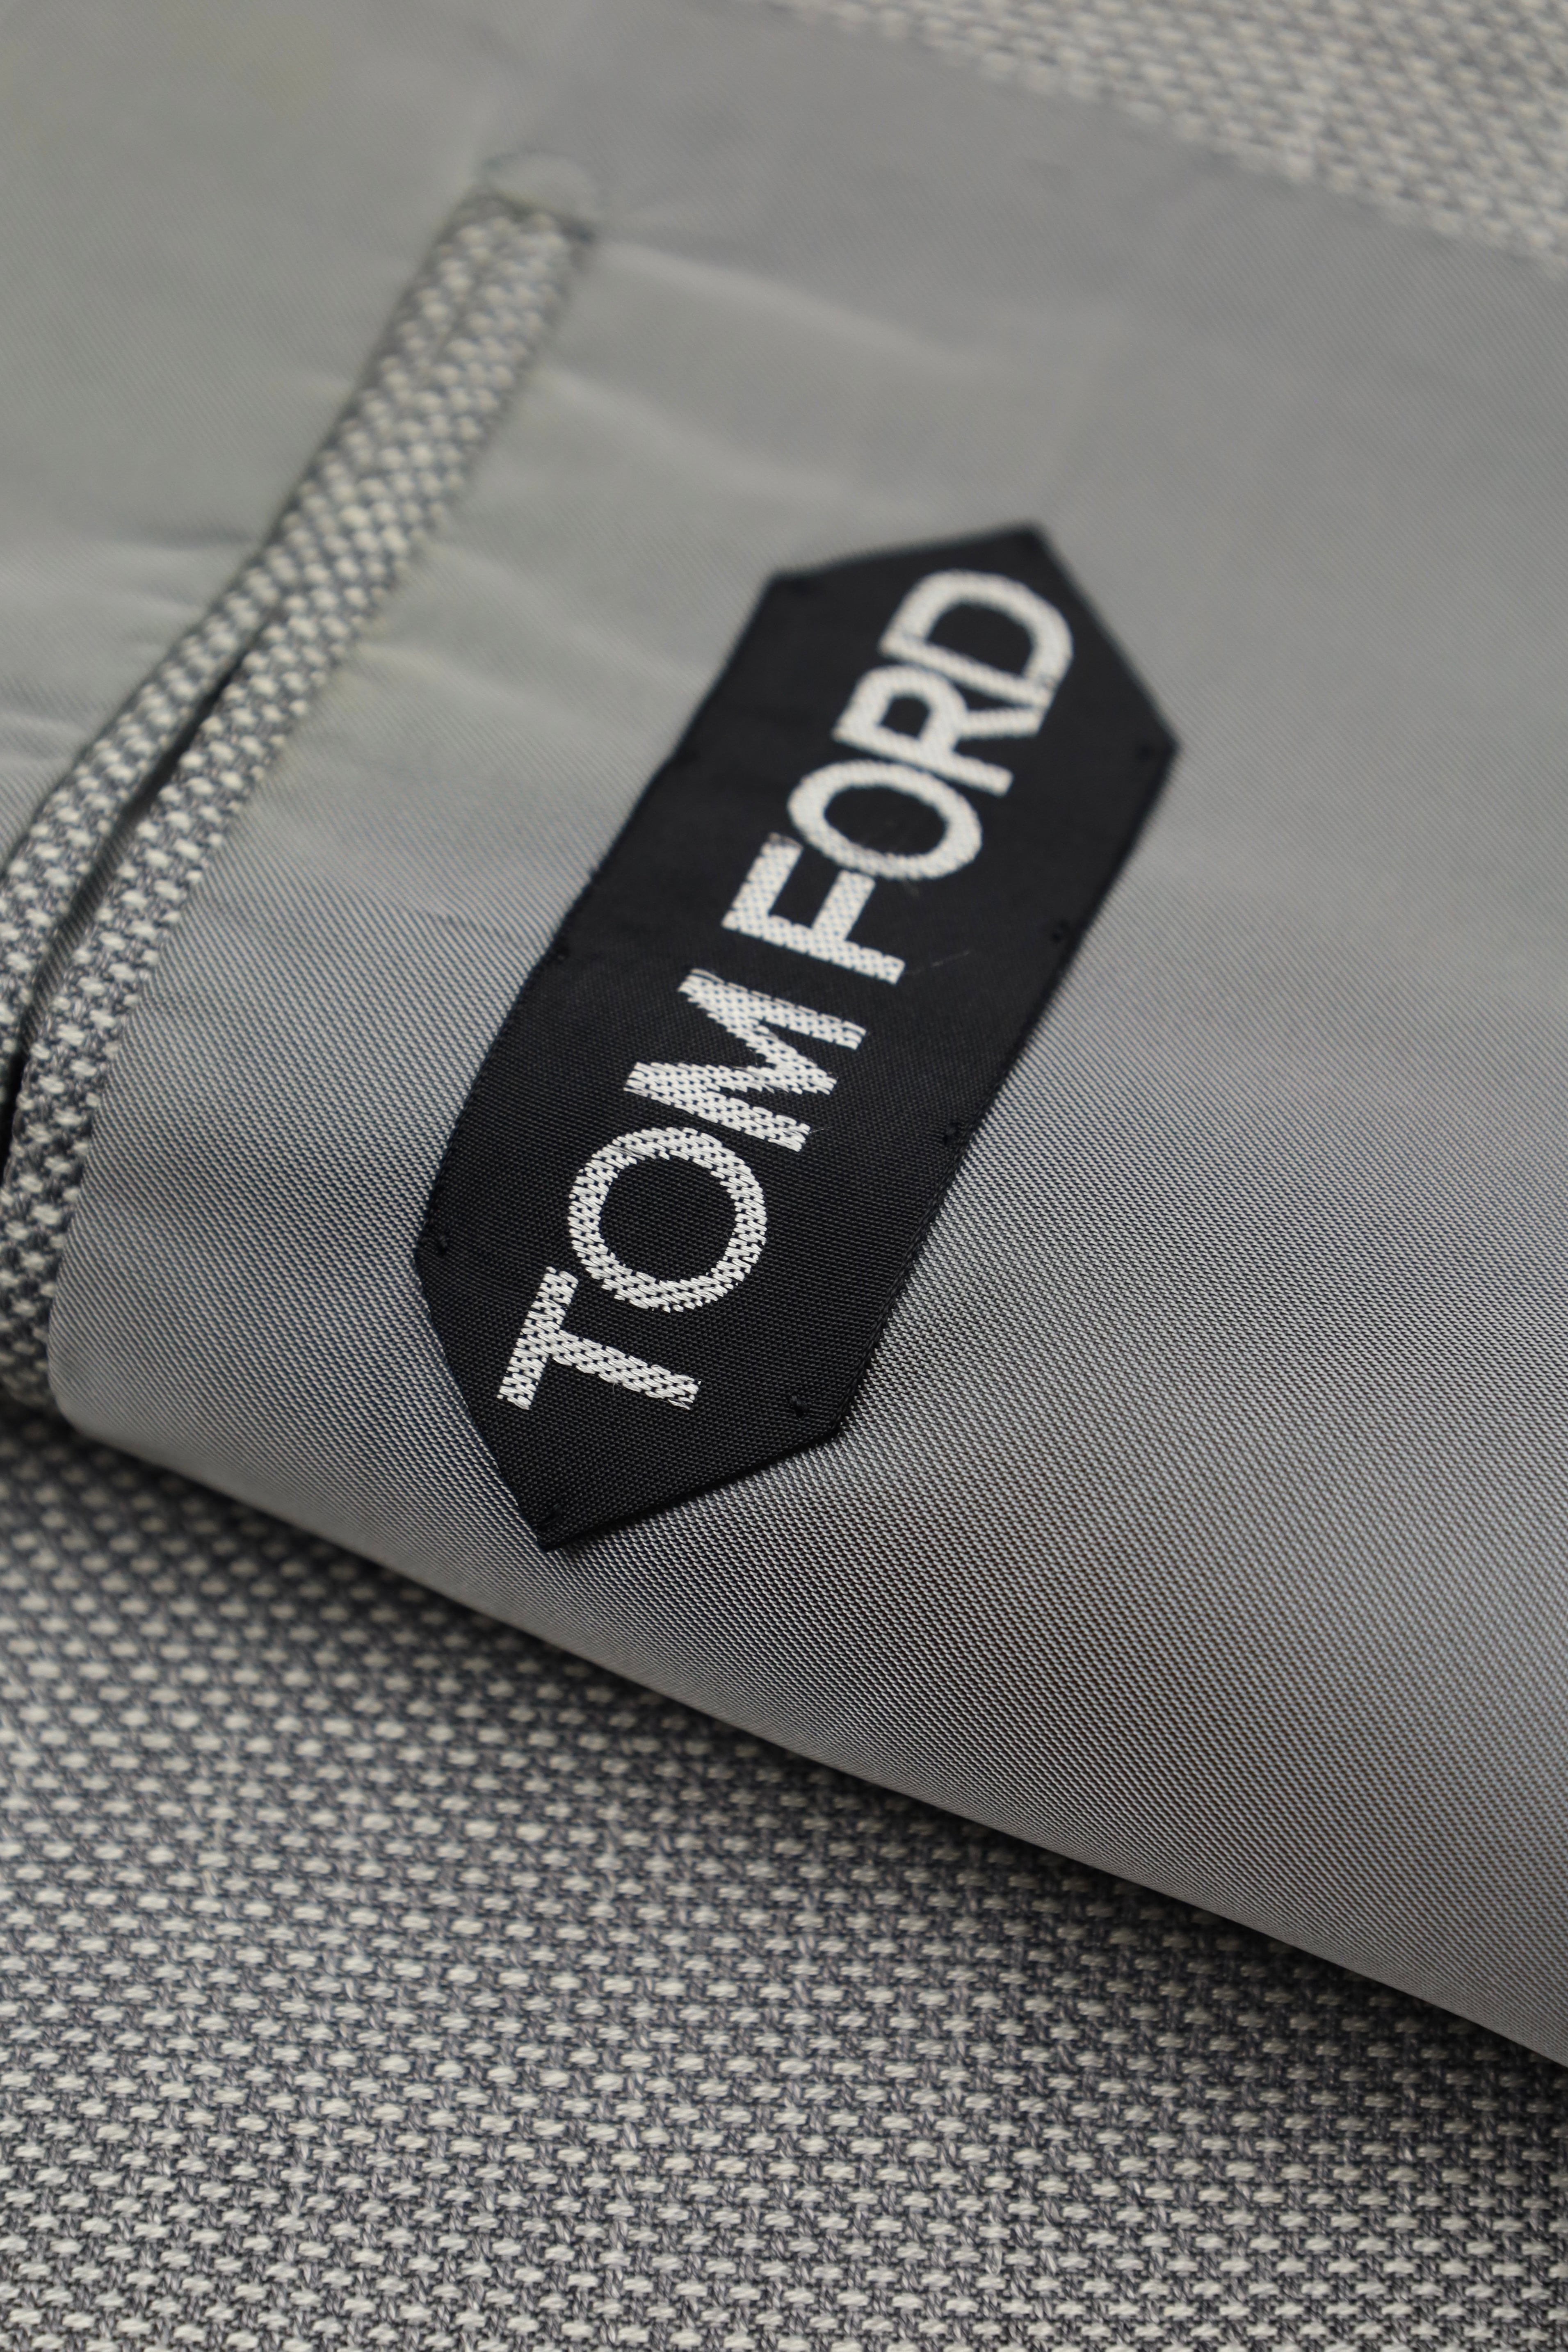 Tom Ford Light Grey Wool, Silk & Linen Windsor Jacket